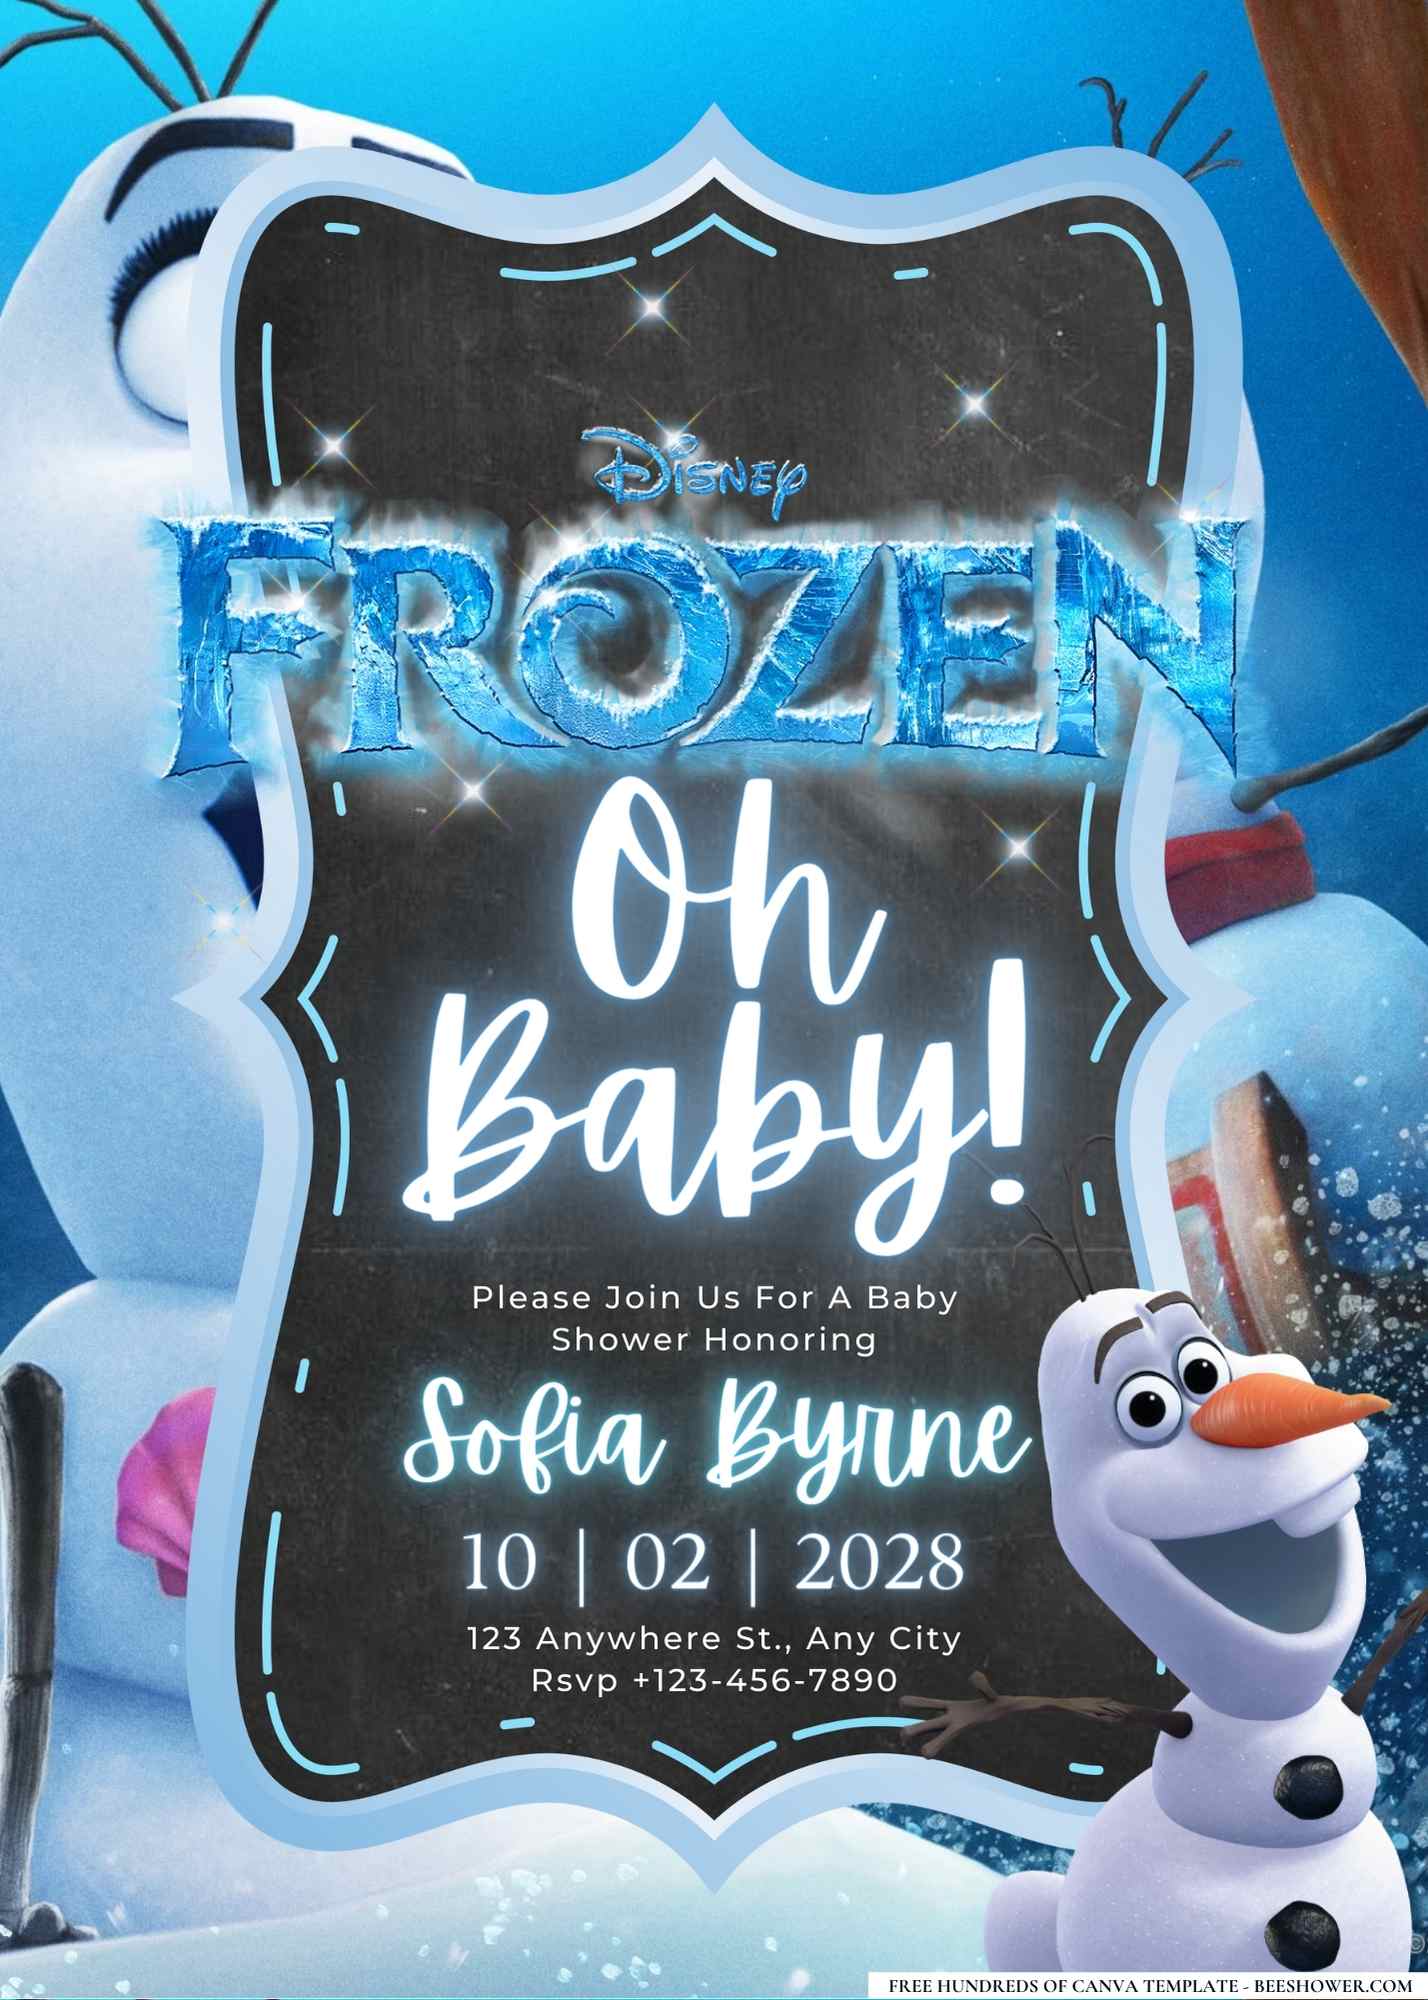 Olaf (Frozen) Baby Shower Invitation